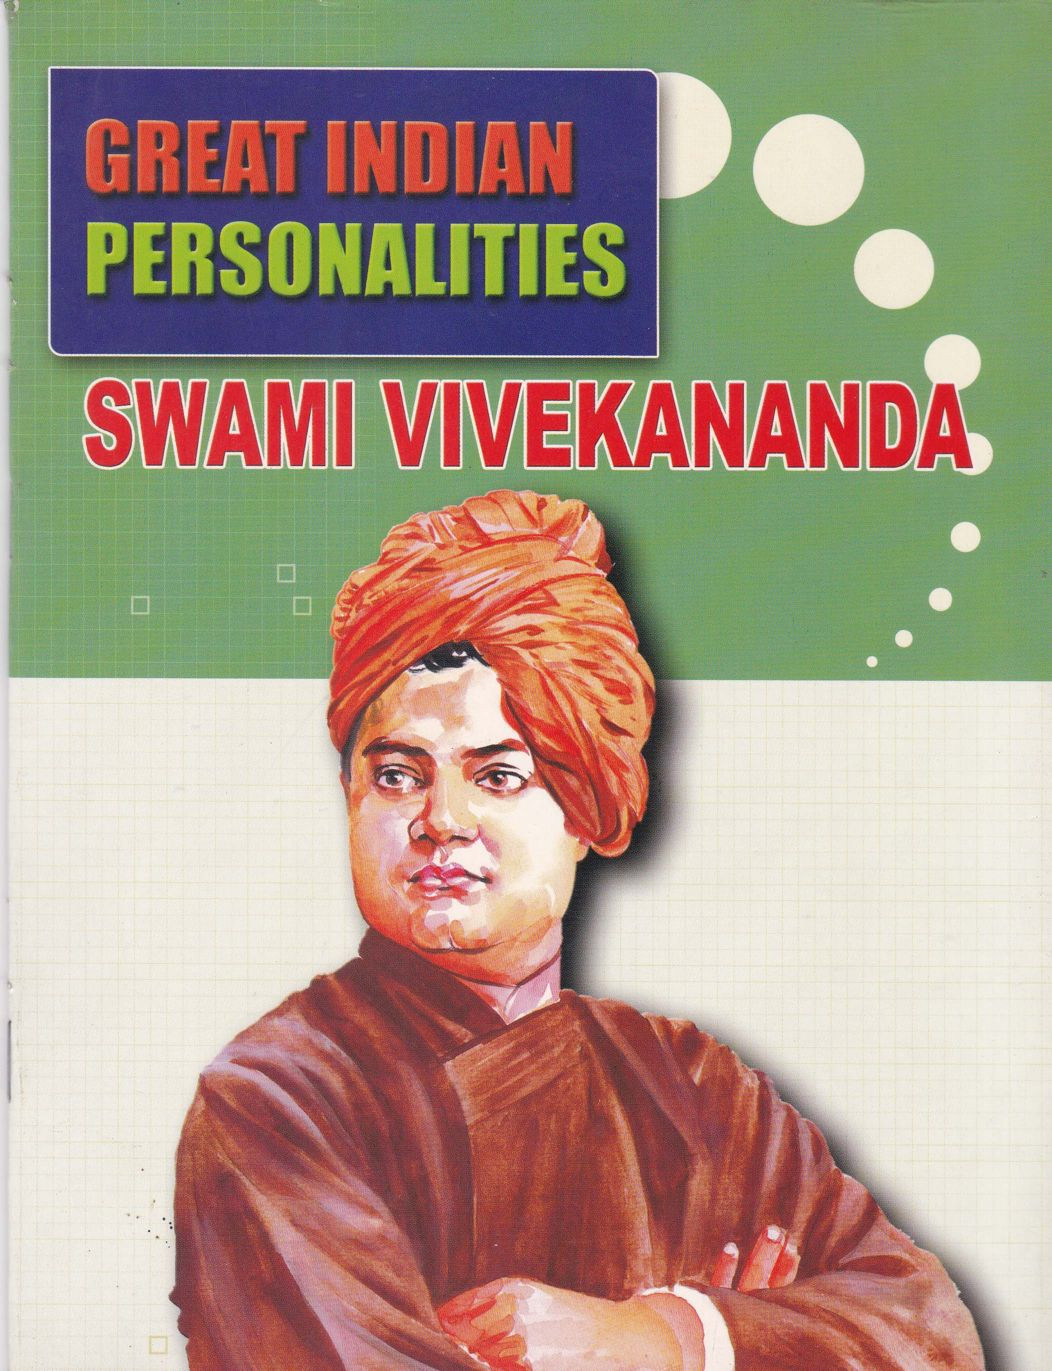 swami-vivekananda-kolar-kirshna-iyer